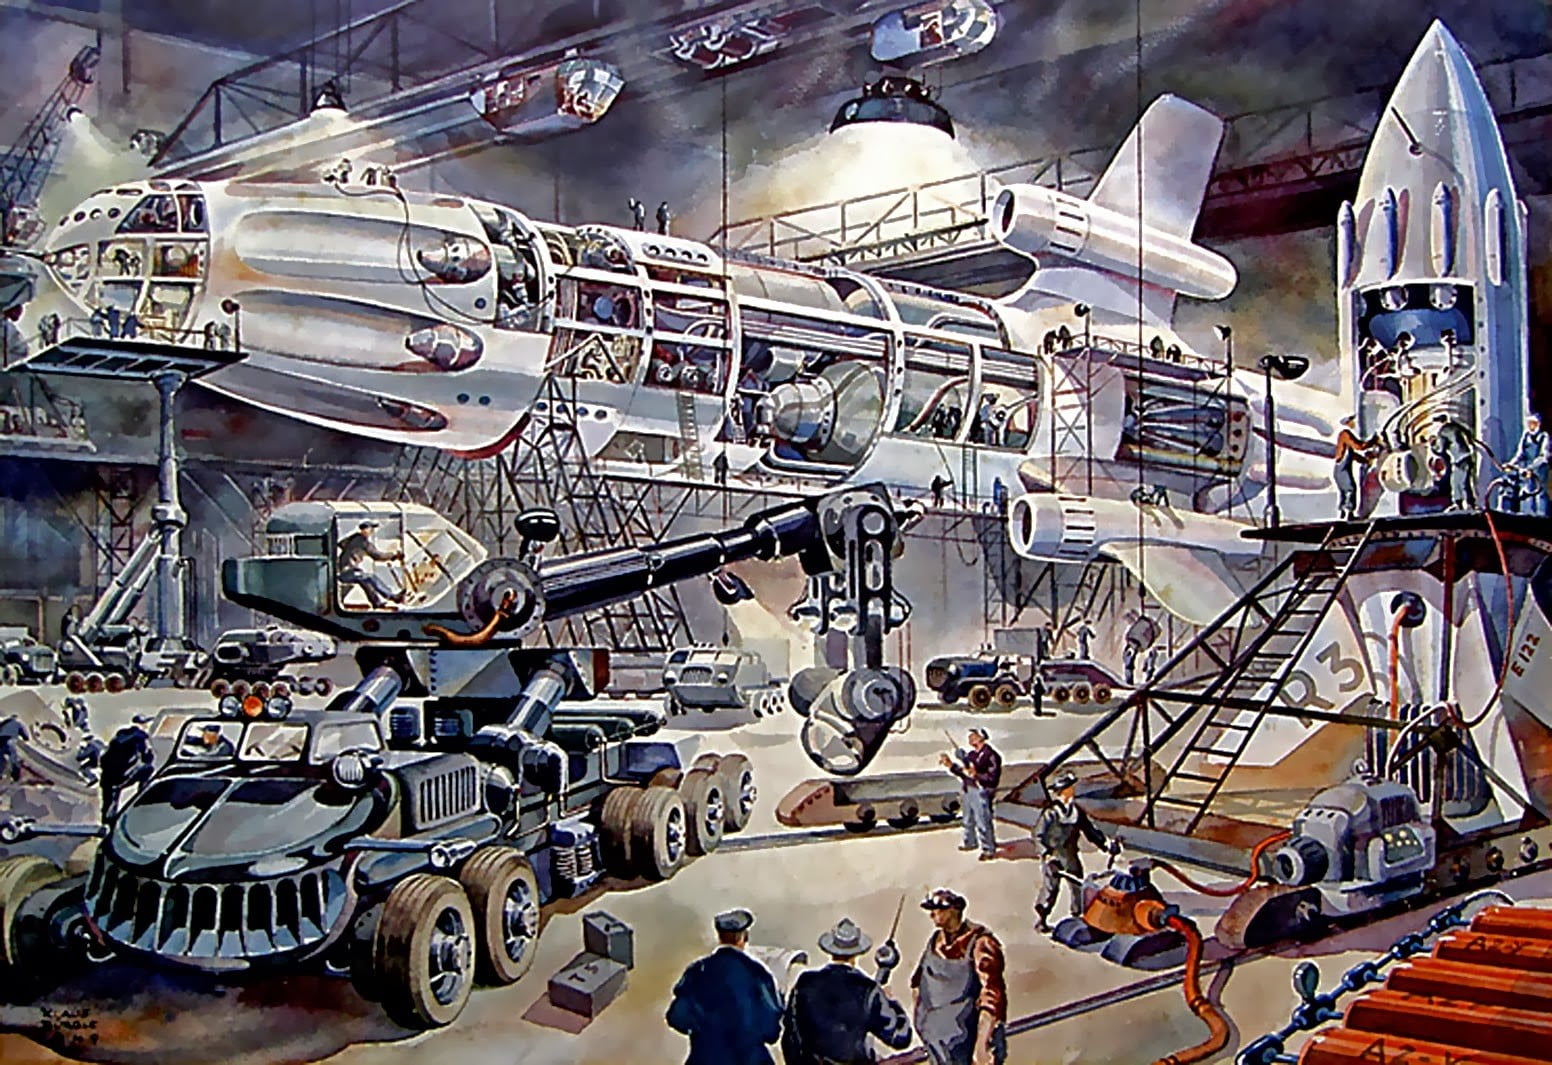 White space shuttle illustration, science fiction, artwork, retro ...